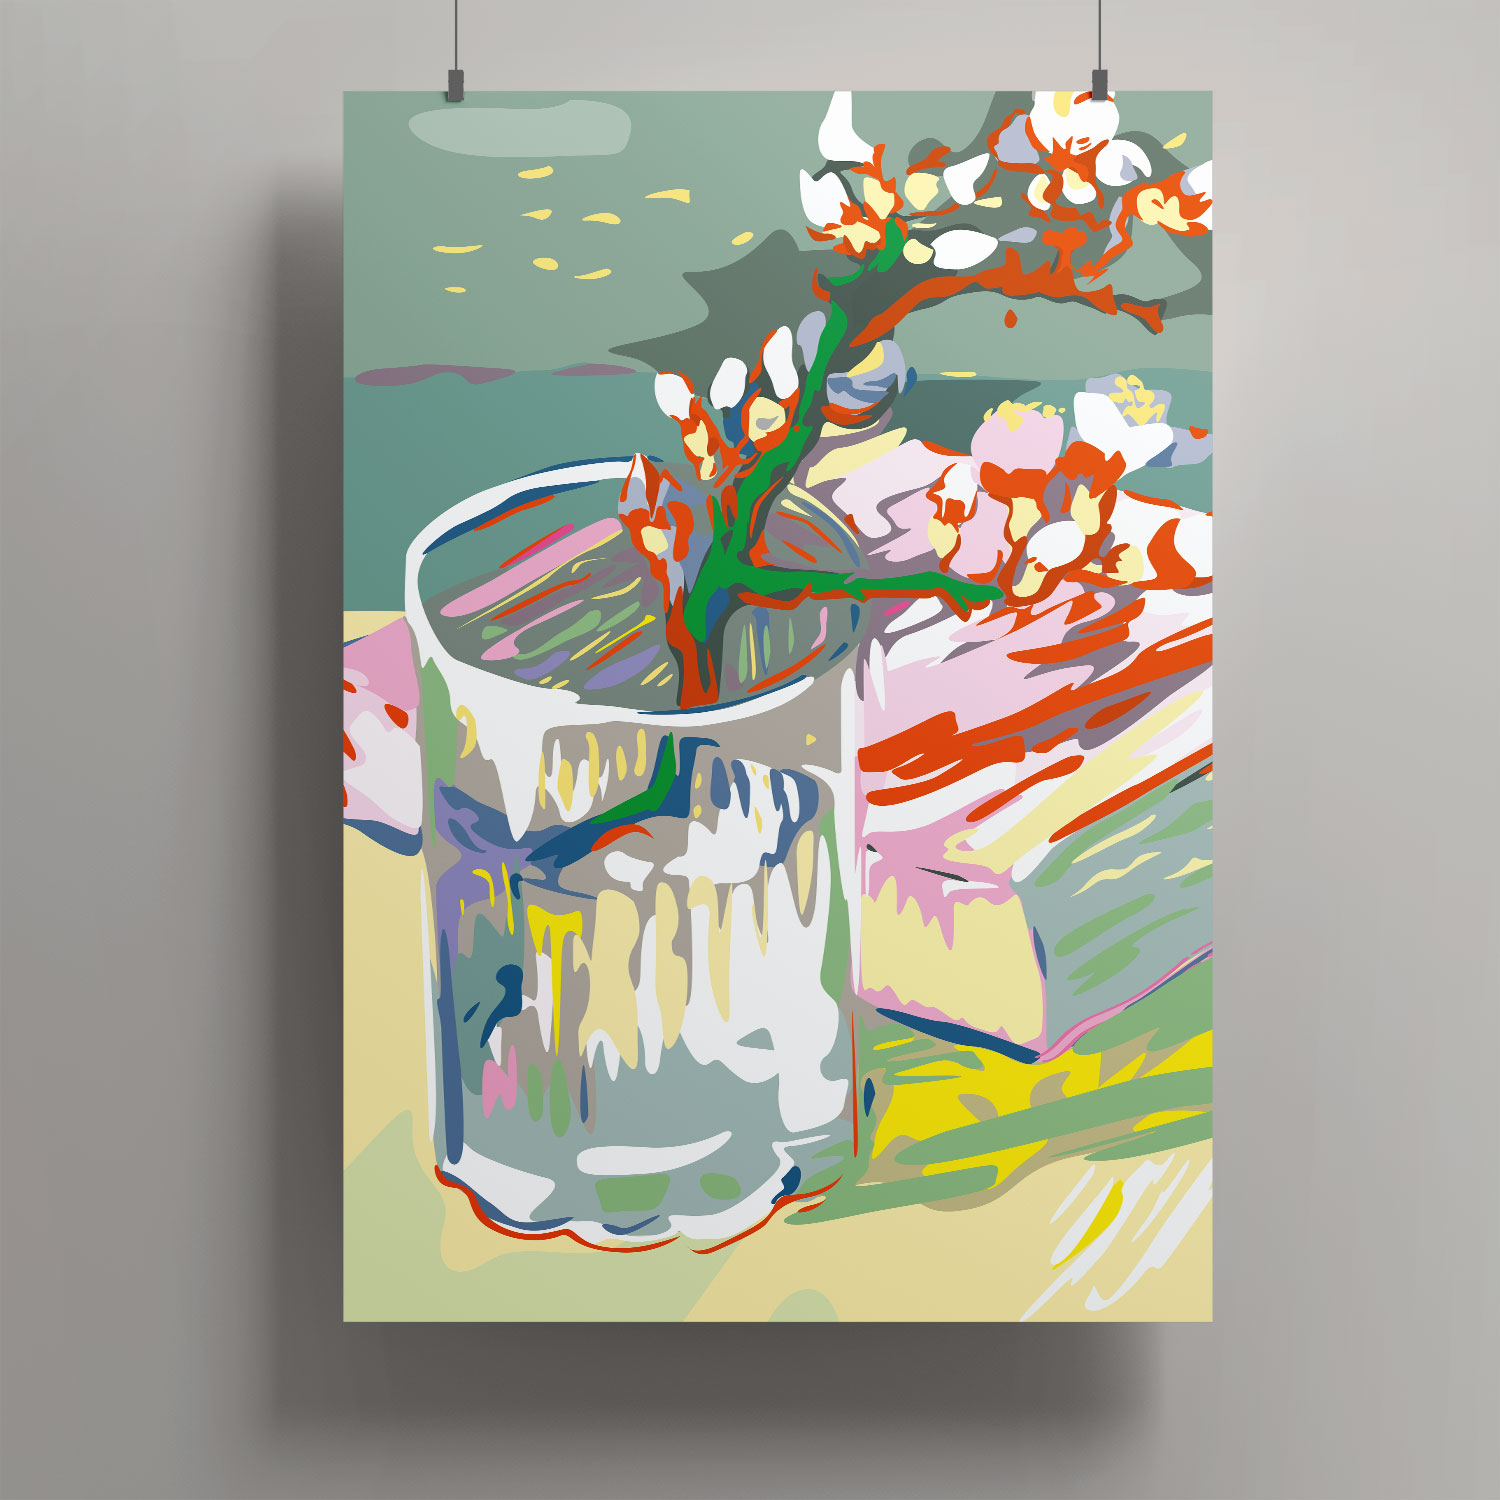 Artprint A3 - Blossoming Almond in a Glass' van Gogh